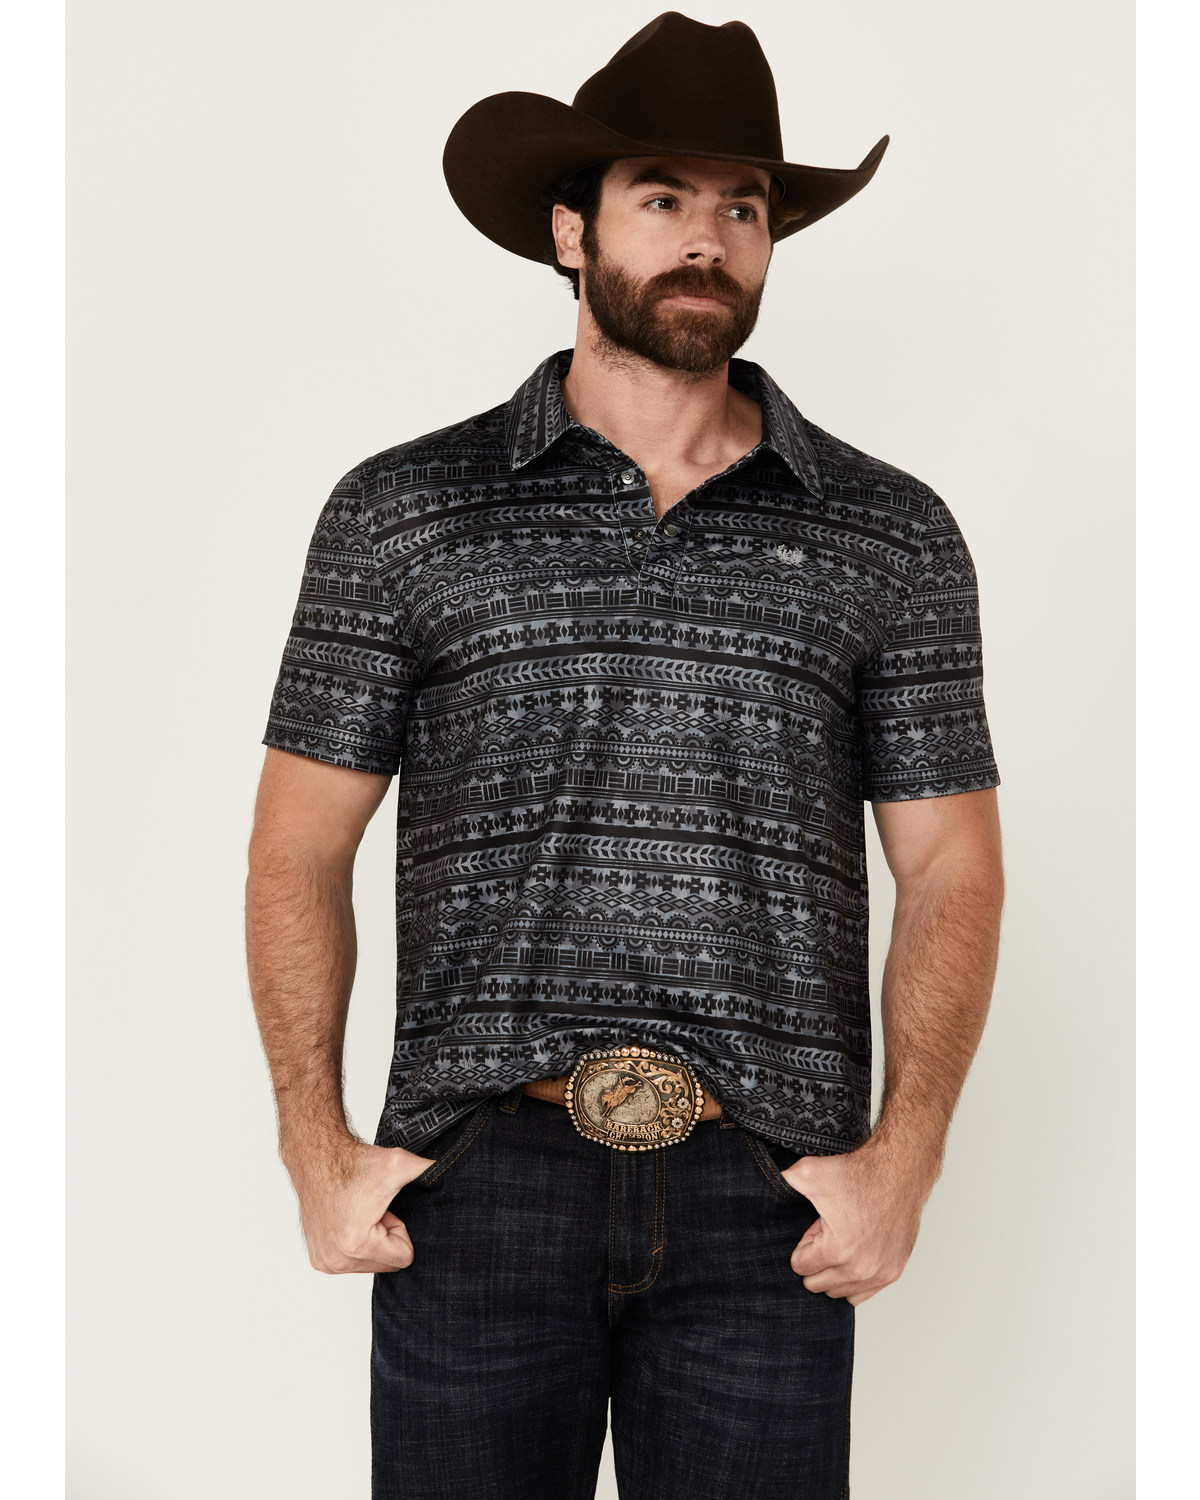 Panhandle Men's Southwestern Print Short Sleeve Performance Polo Shirt